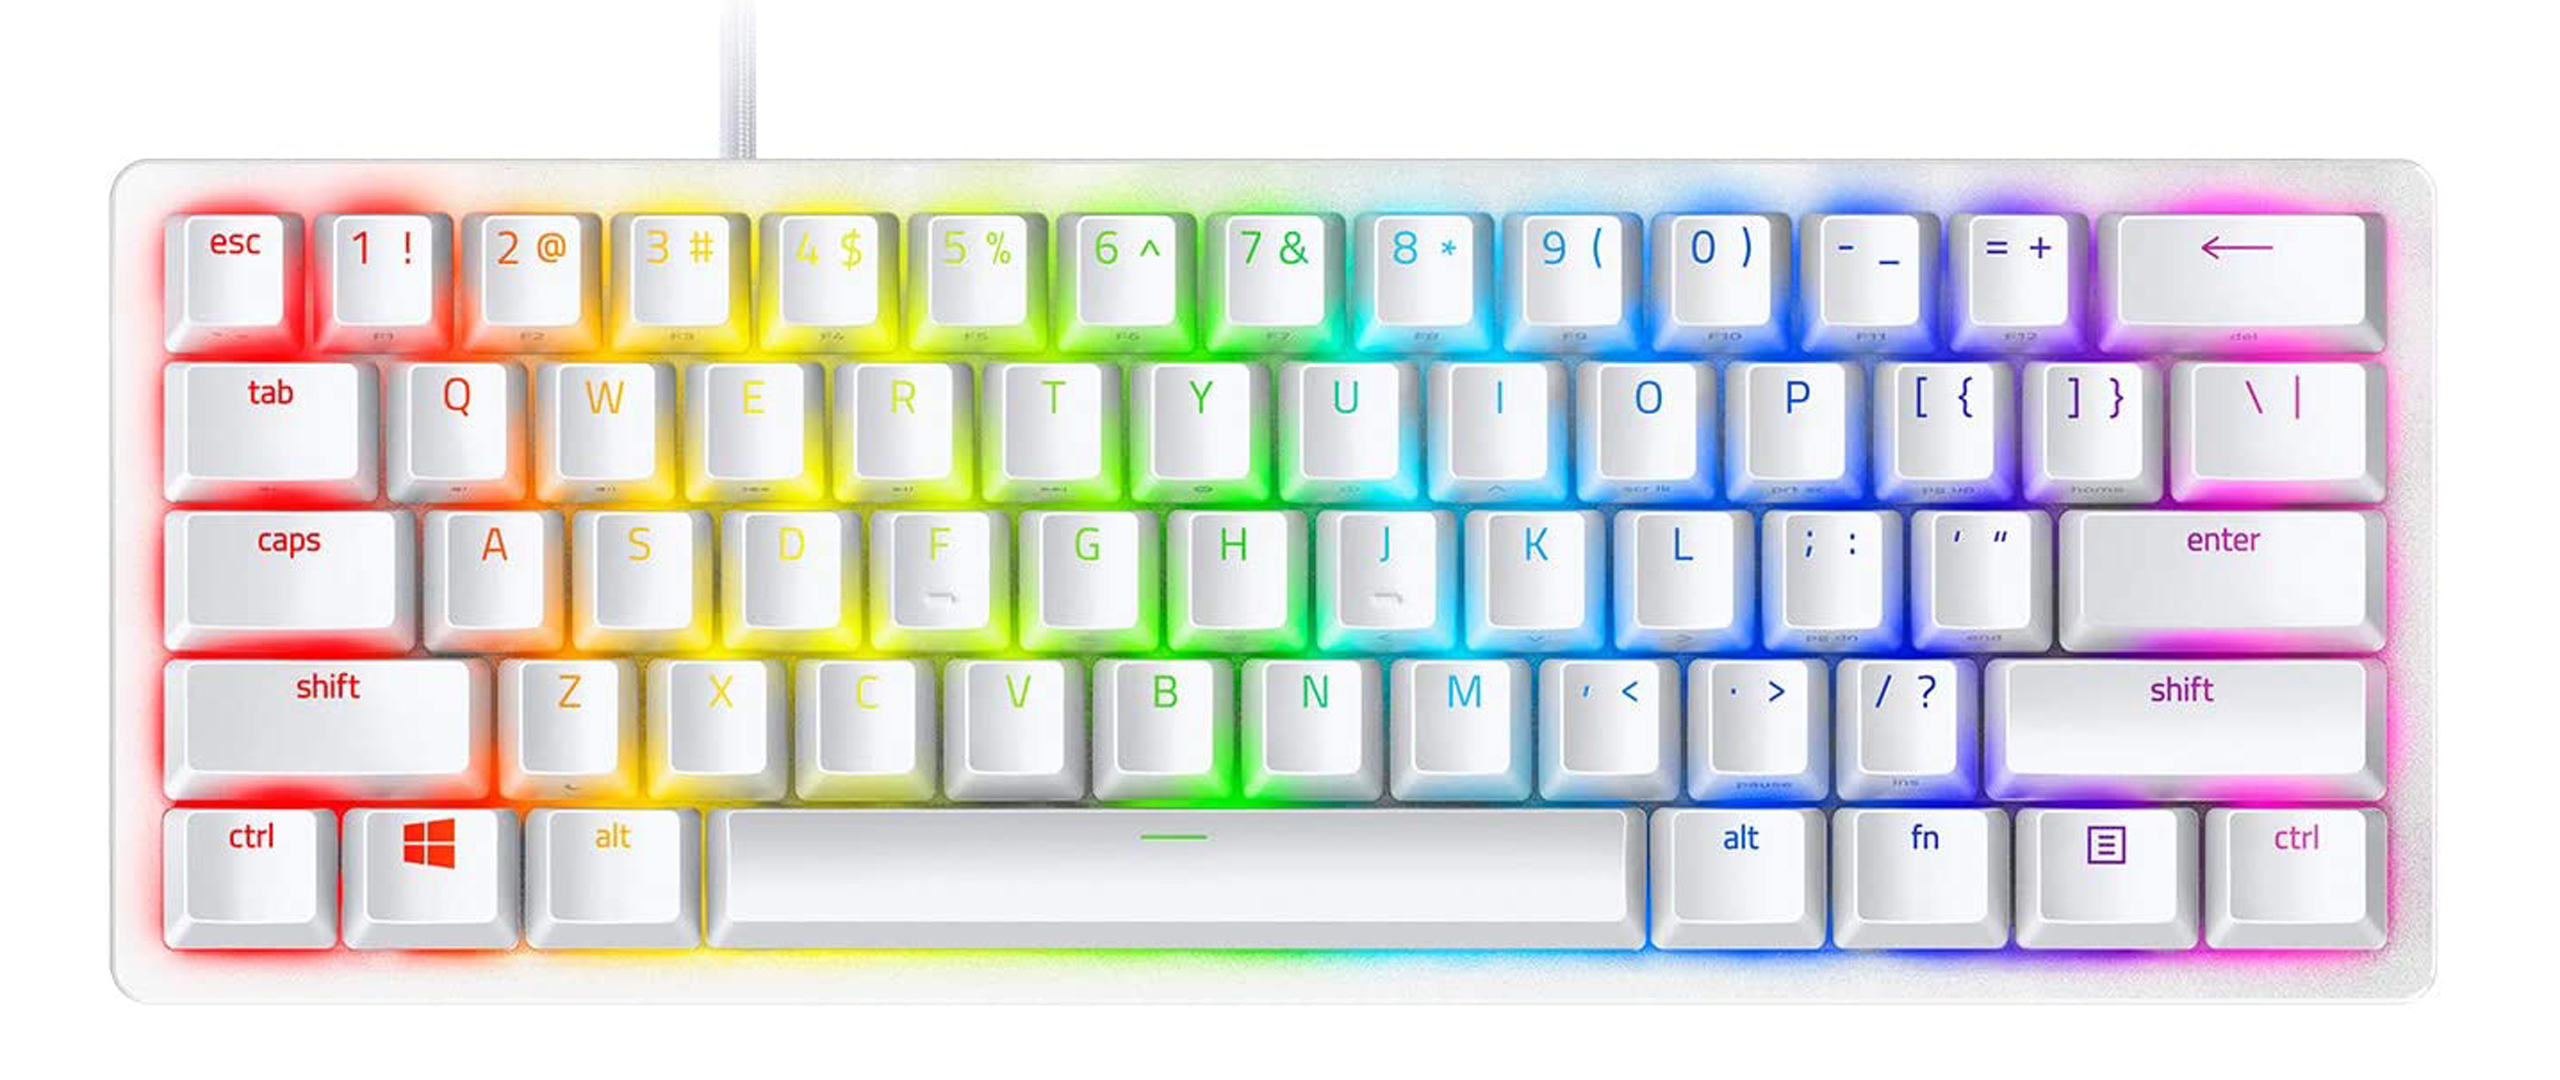 Razer Huntsman Mini Keyboard